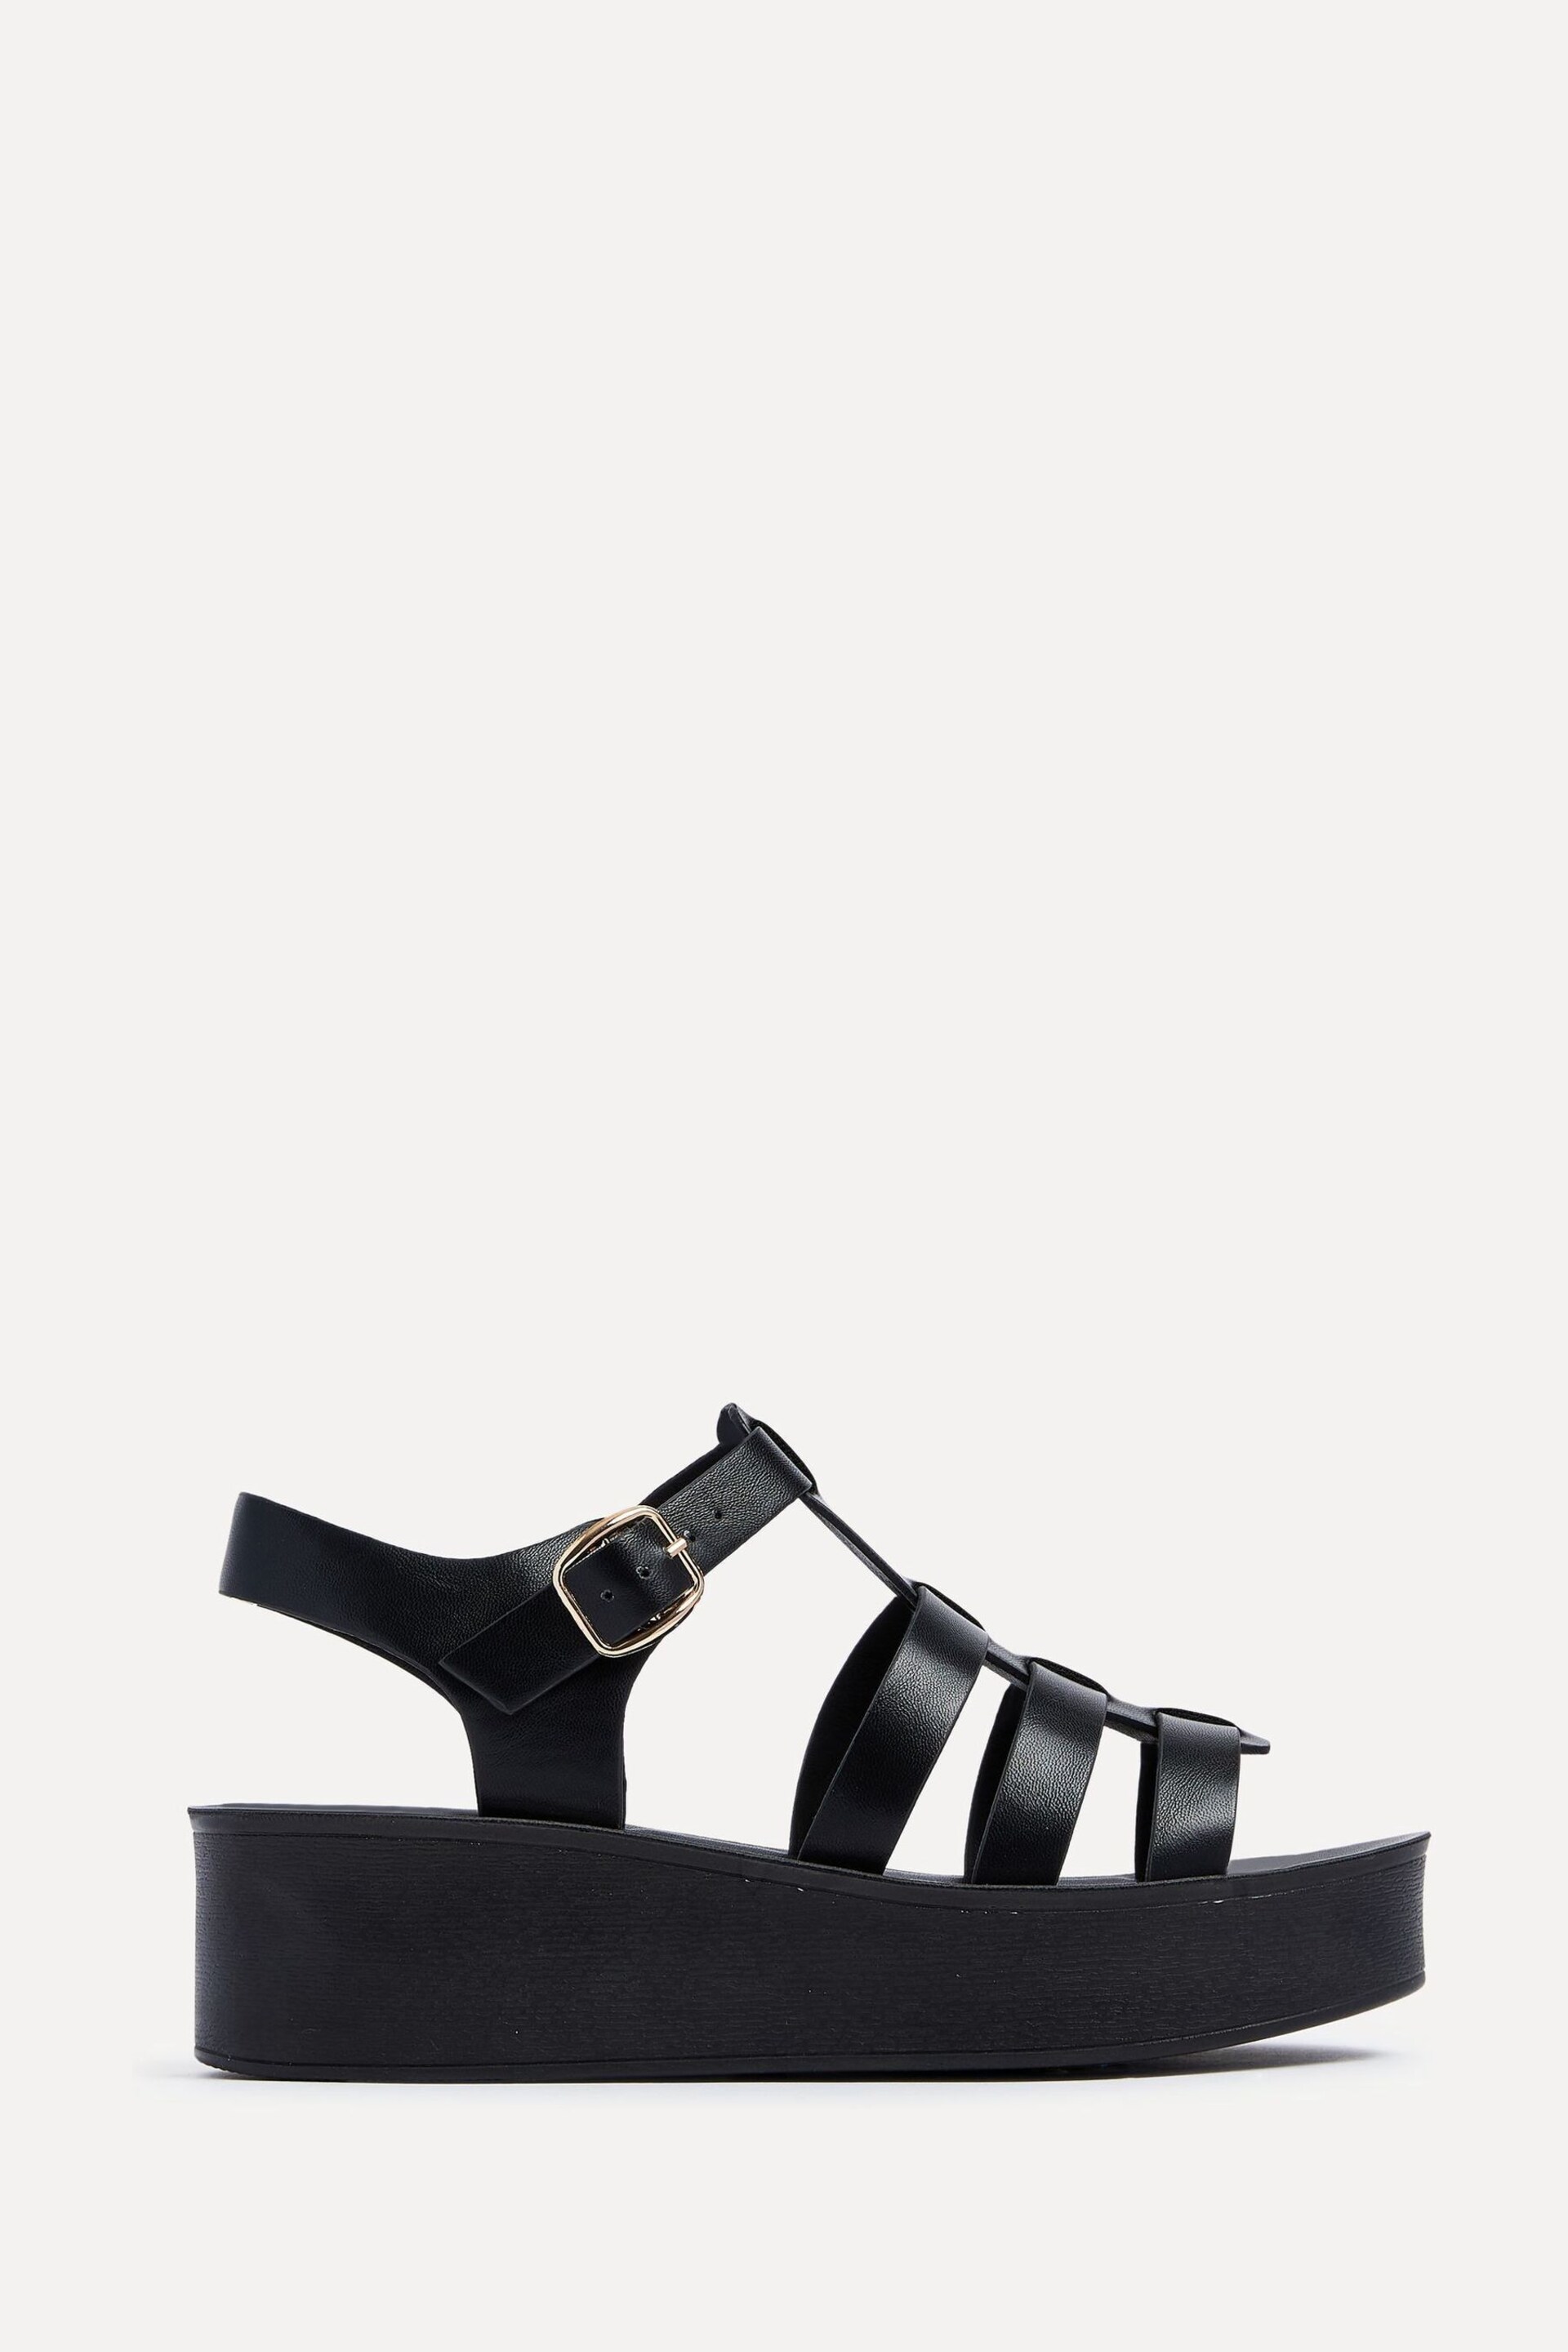 Linzi Black Rhoades Gladiator Inspired Flatform Sandals - Image 2 of 5